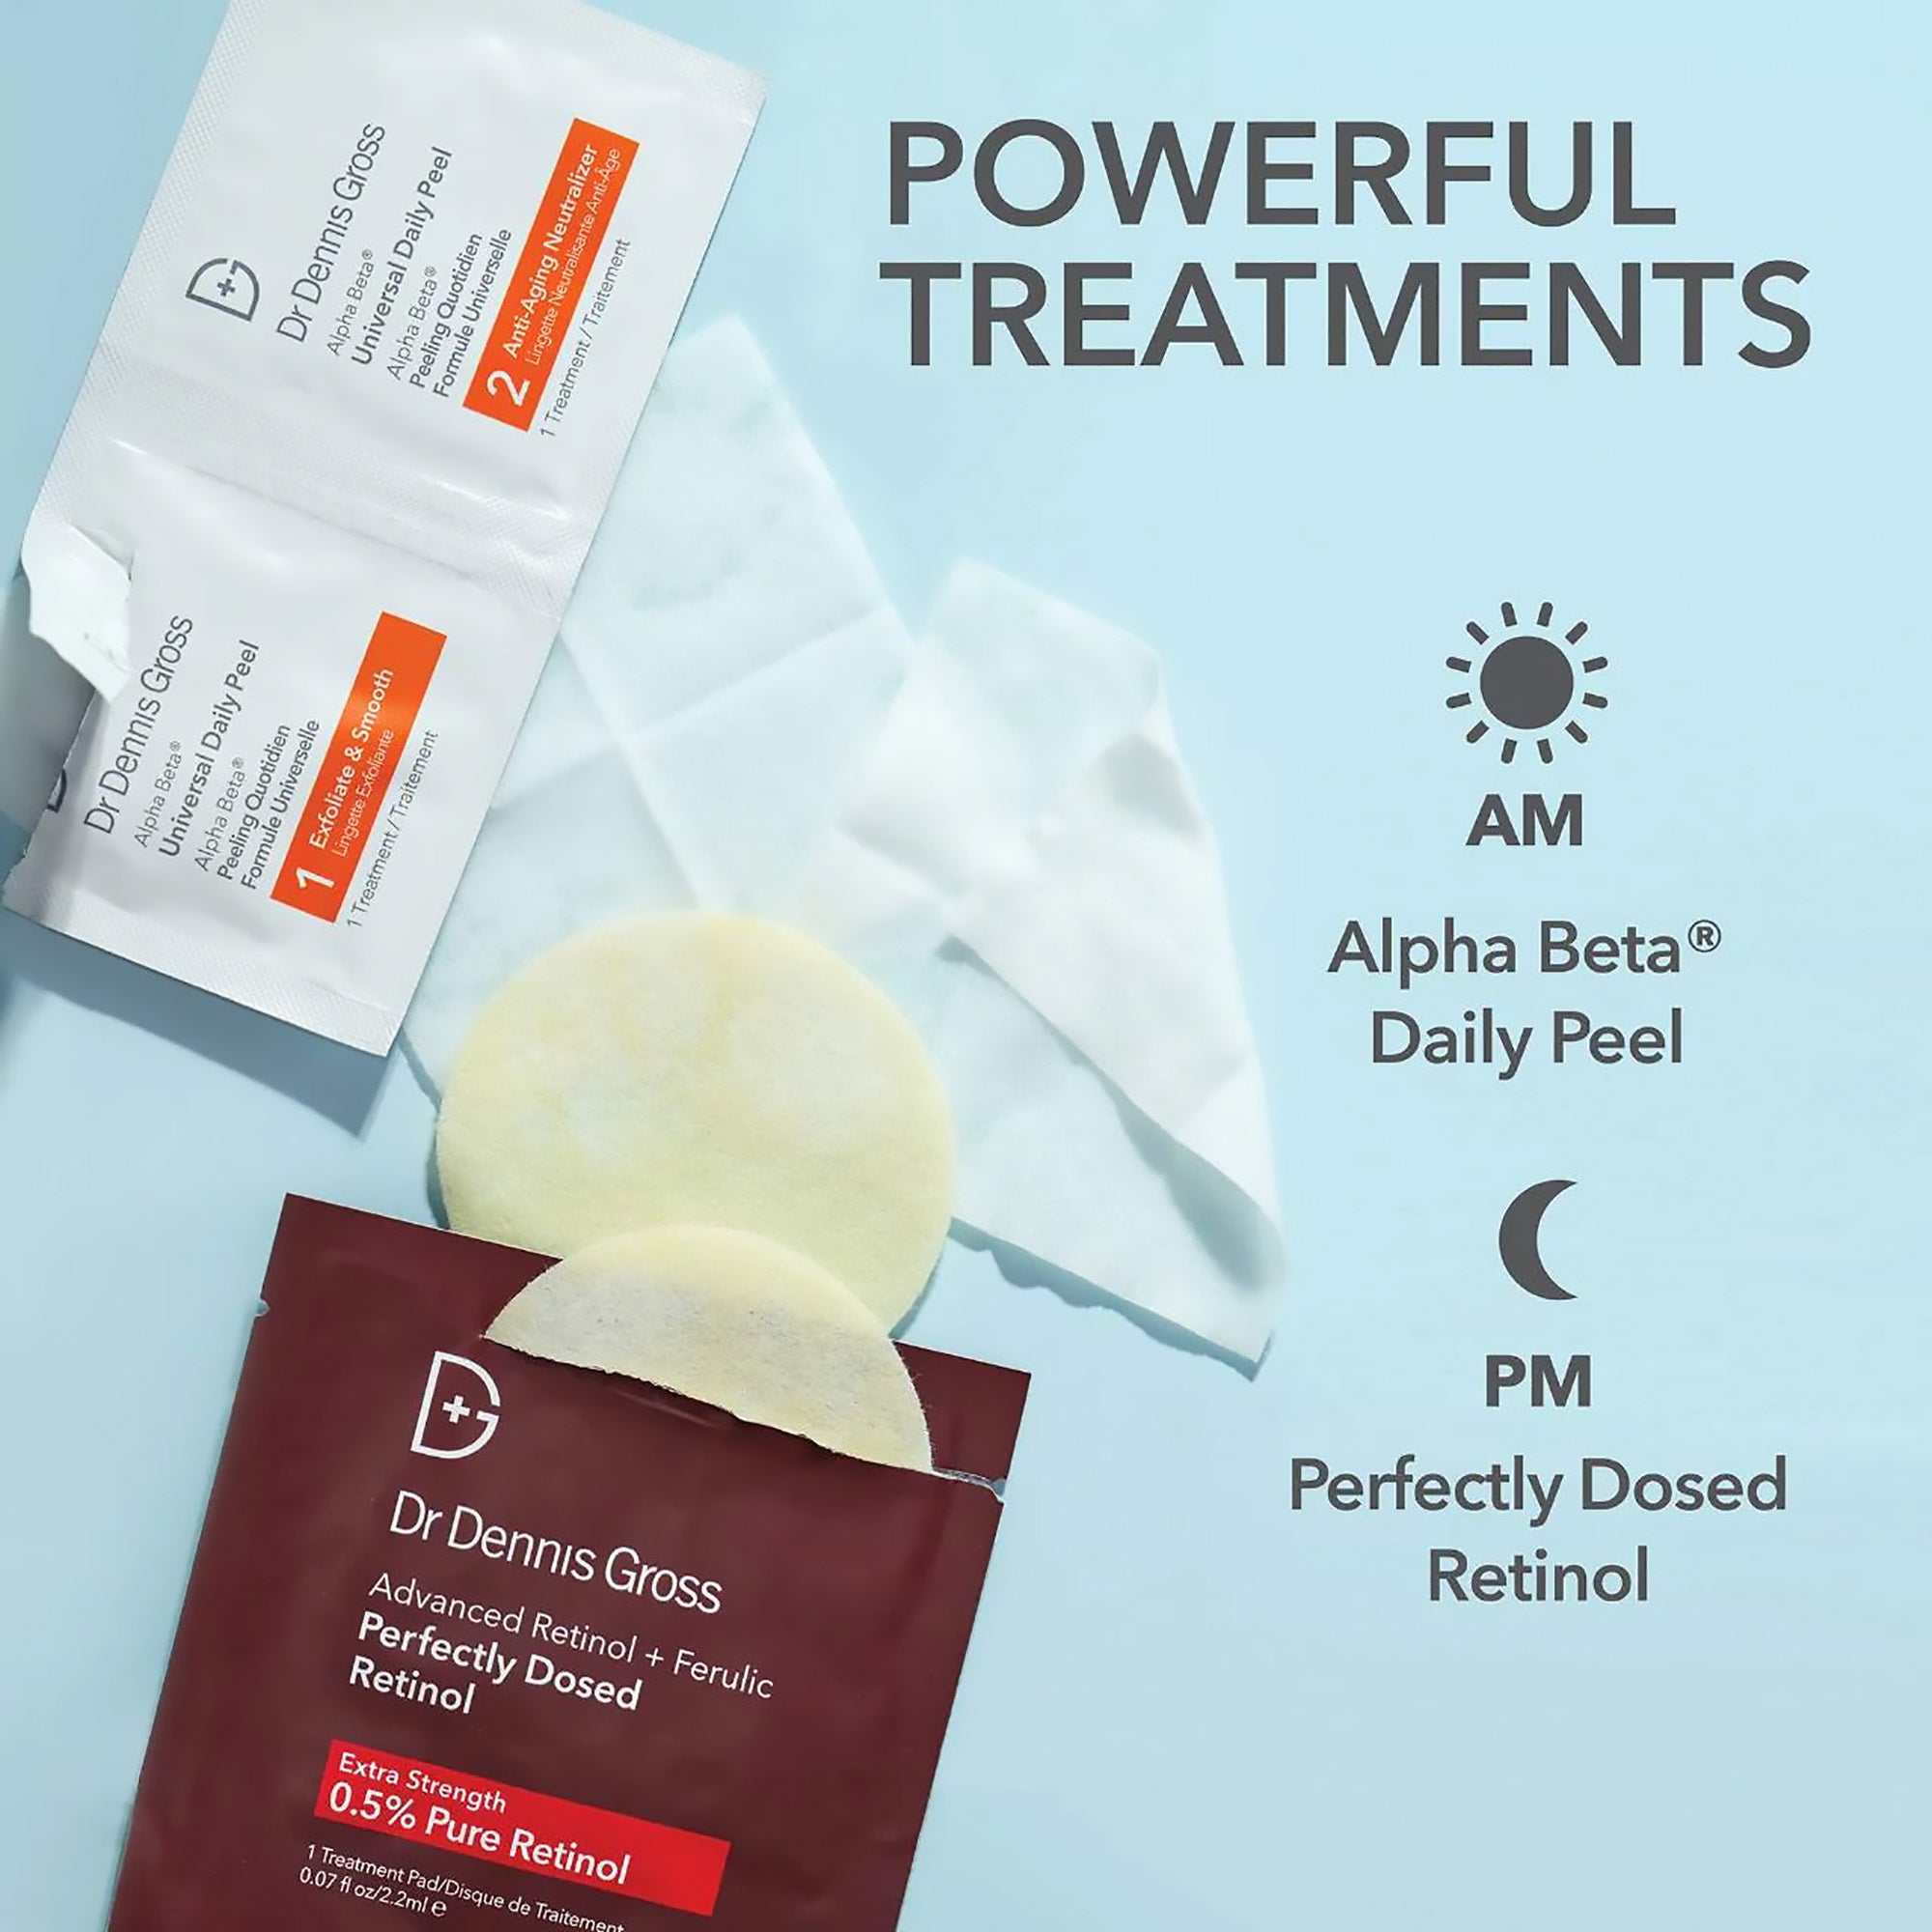 Dr. Dennis Gross Skincare Advanced Retinol + Ferulic Perfectly Dosed Retinol Extra Strength 0.5% / 8 app